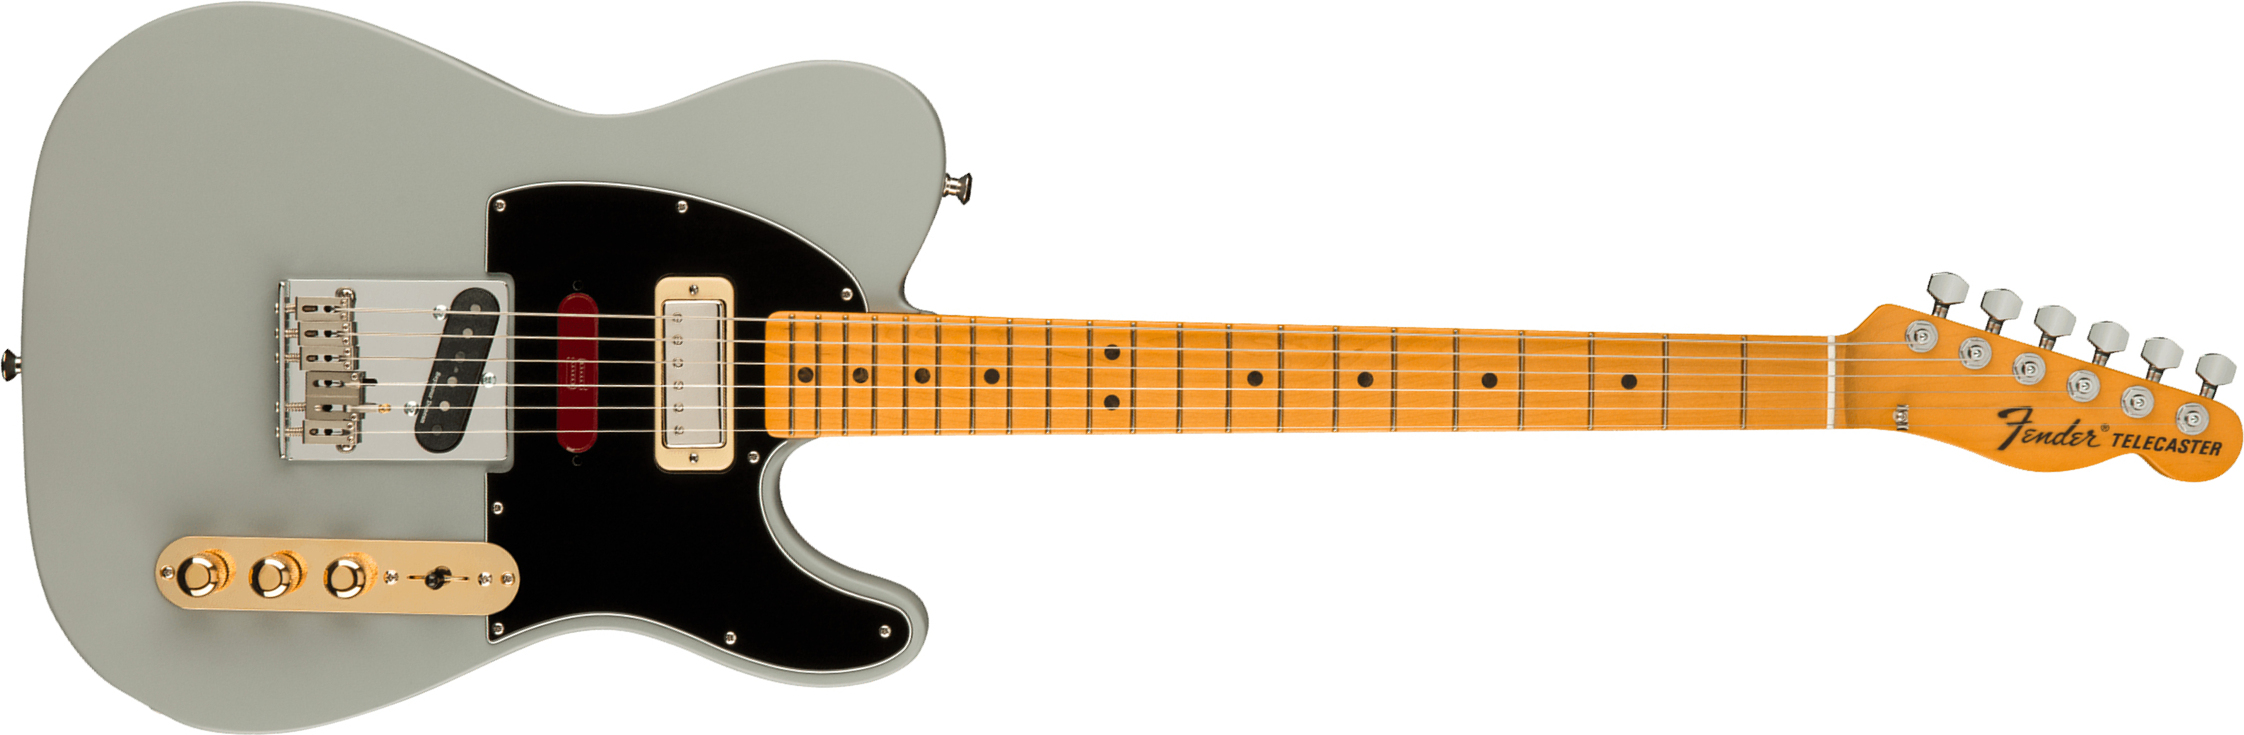 Fender Brent Mason Tele Signature Usa Ssh B-bender Mn - Primer Gray - Televorm elektrische gitaar - Main picture